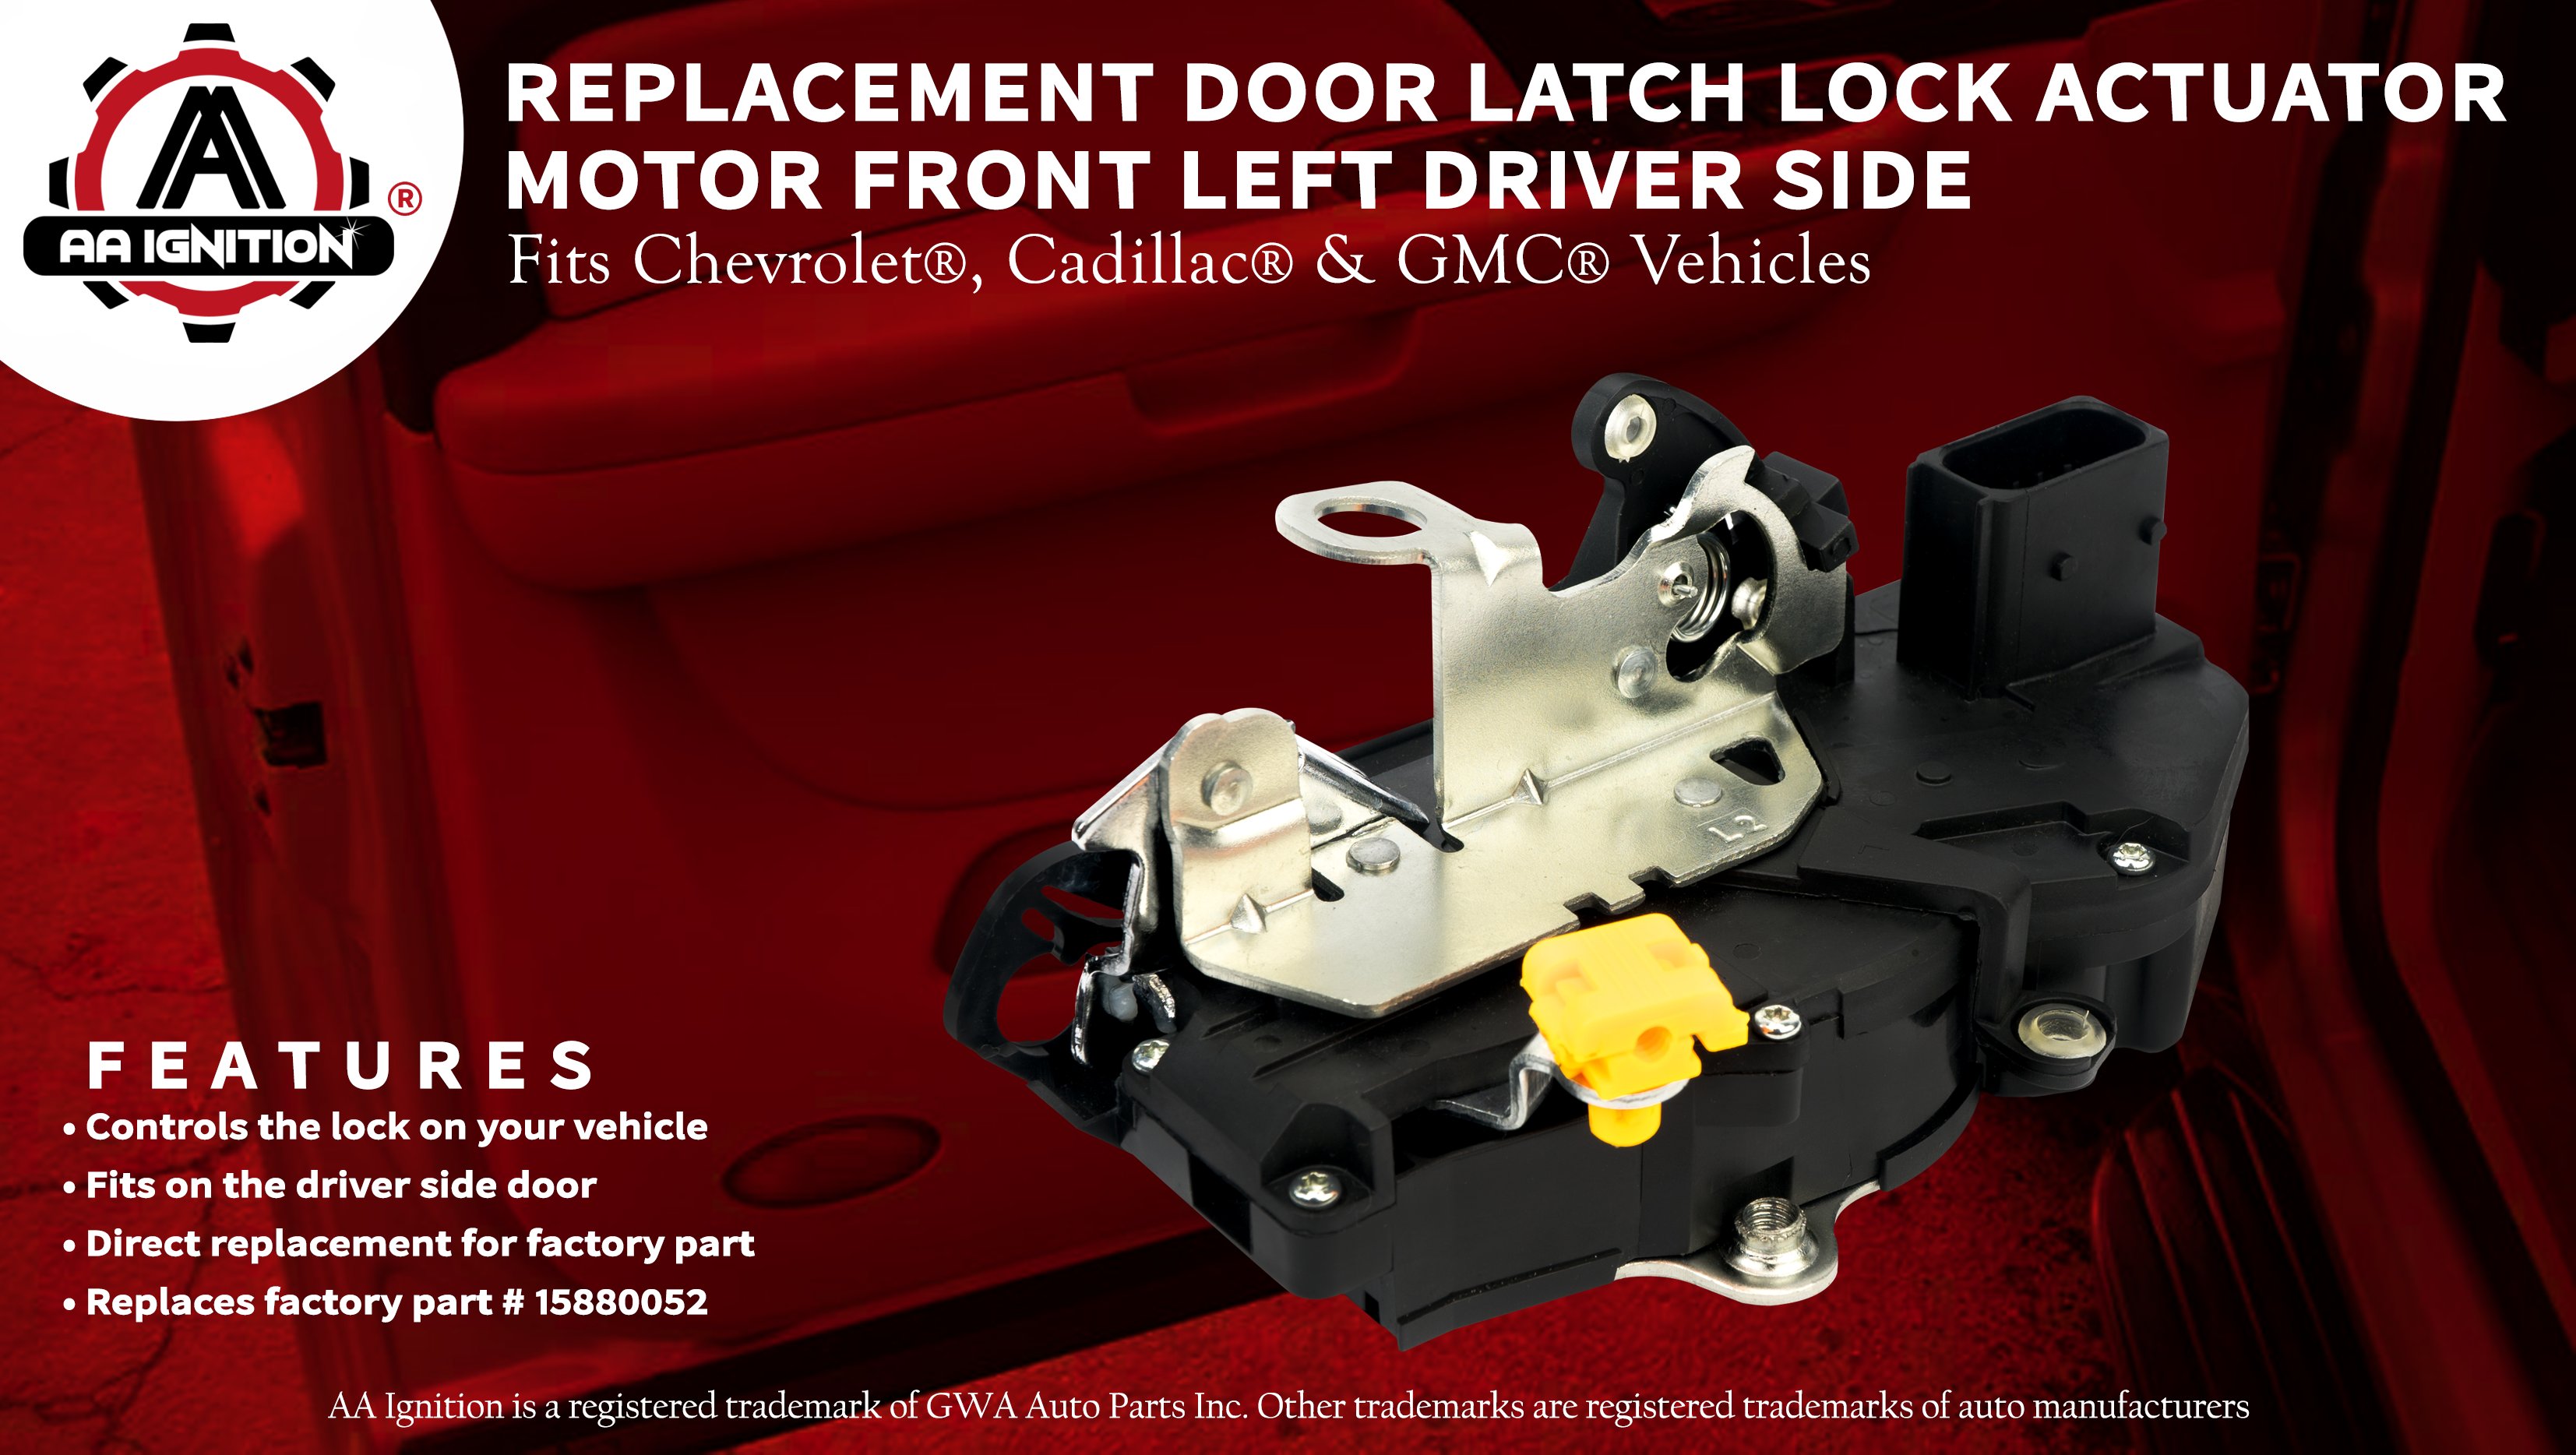 Door Latch Lock Actuator Motor Front Left Driver Side Replaces#  15880052, 207838846, 25789211, 931-303 For 2007, 2008, 2009 Chevy Tahoe,  Silverado HD, Cadillac Escalade, GMC Sierra, Yukon  more